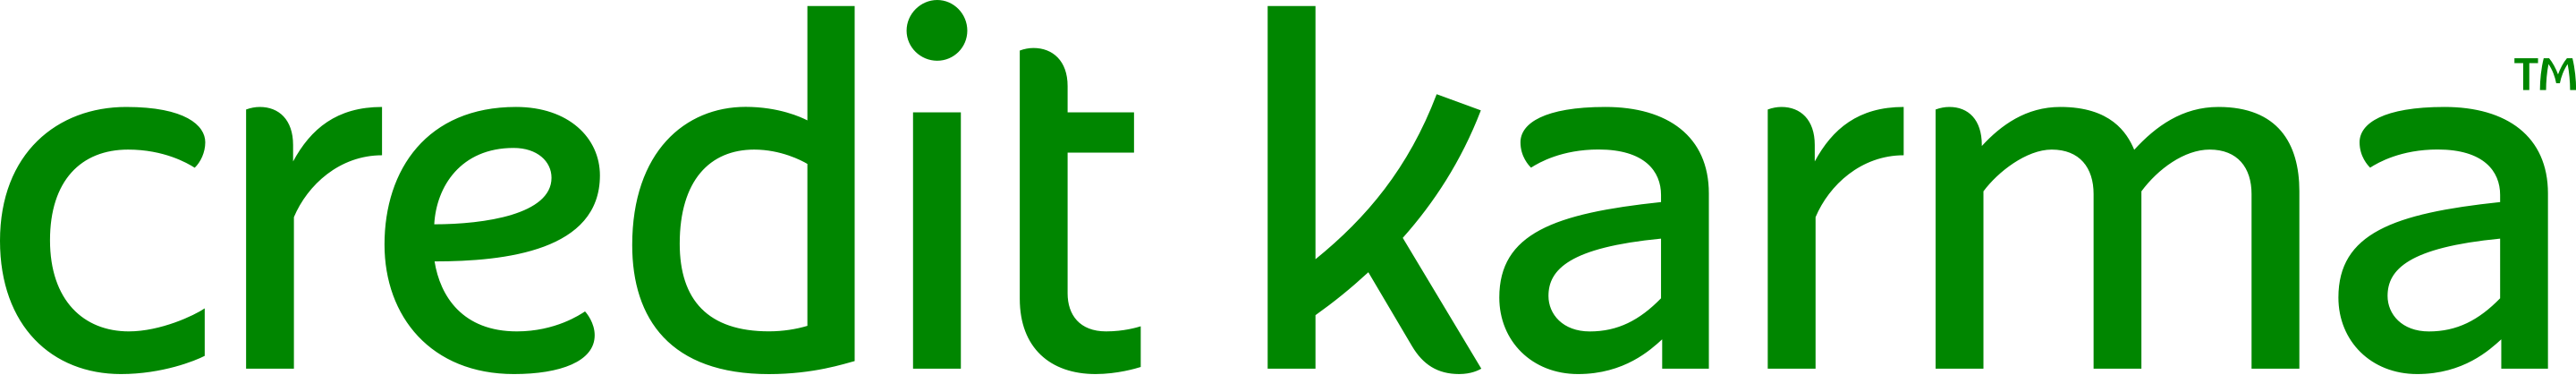 Credit Karma Brand Logo